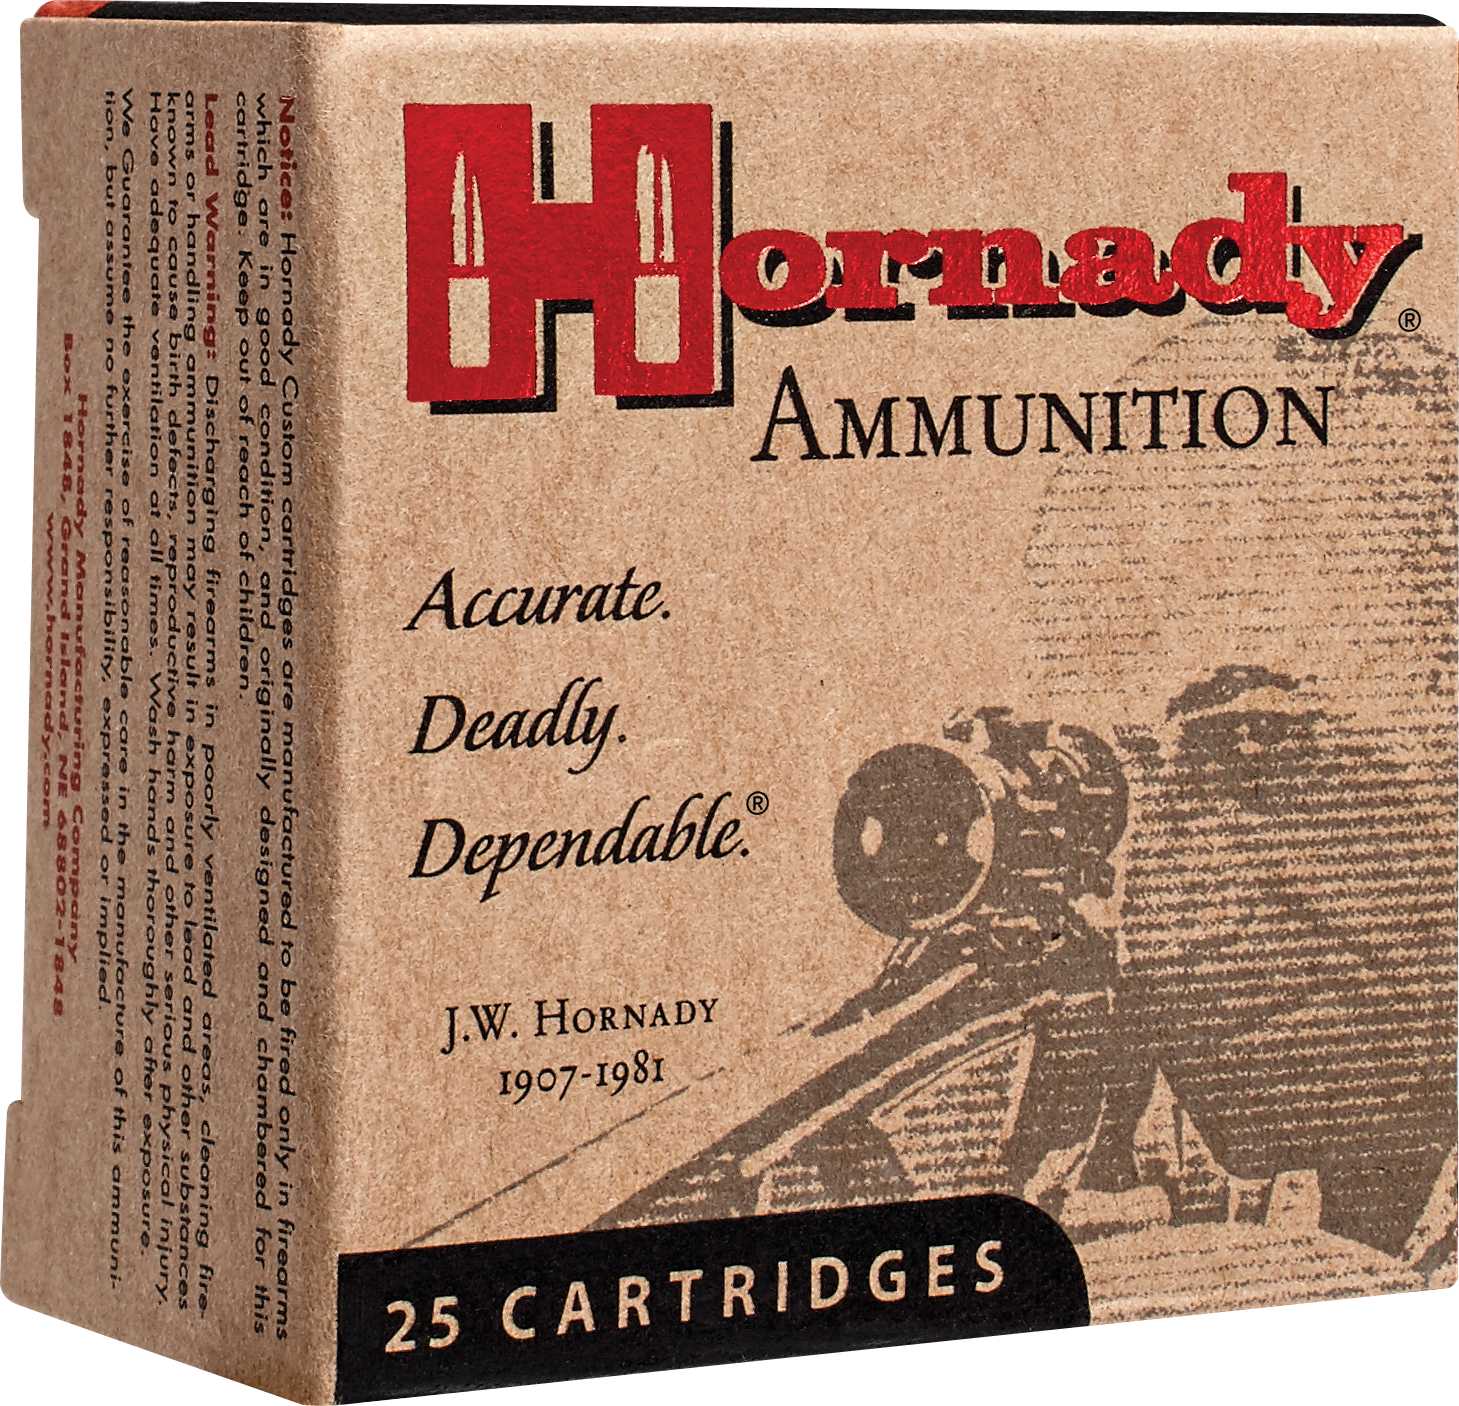 45 ACP 20 Rounds Ammunition Hornady 200 Grain Hollow Point